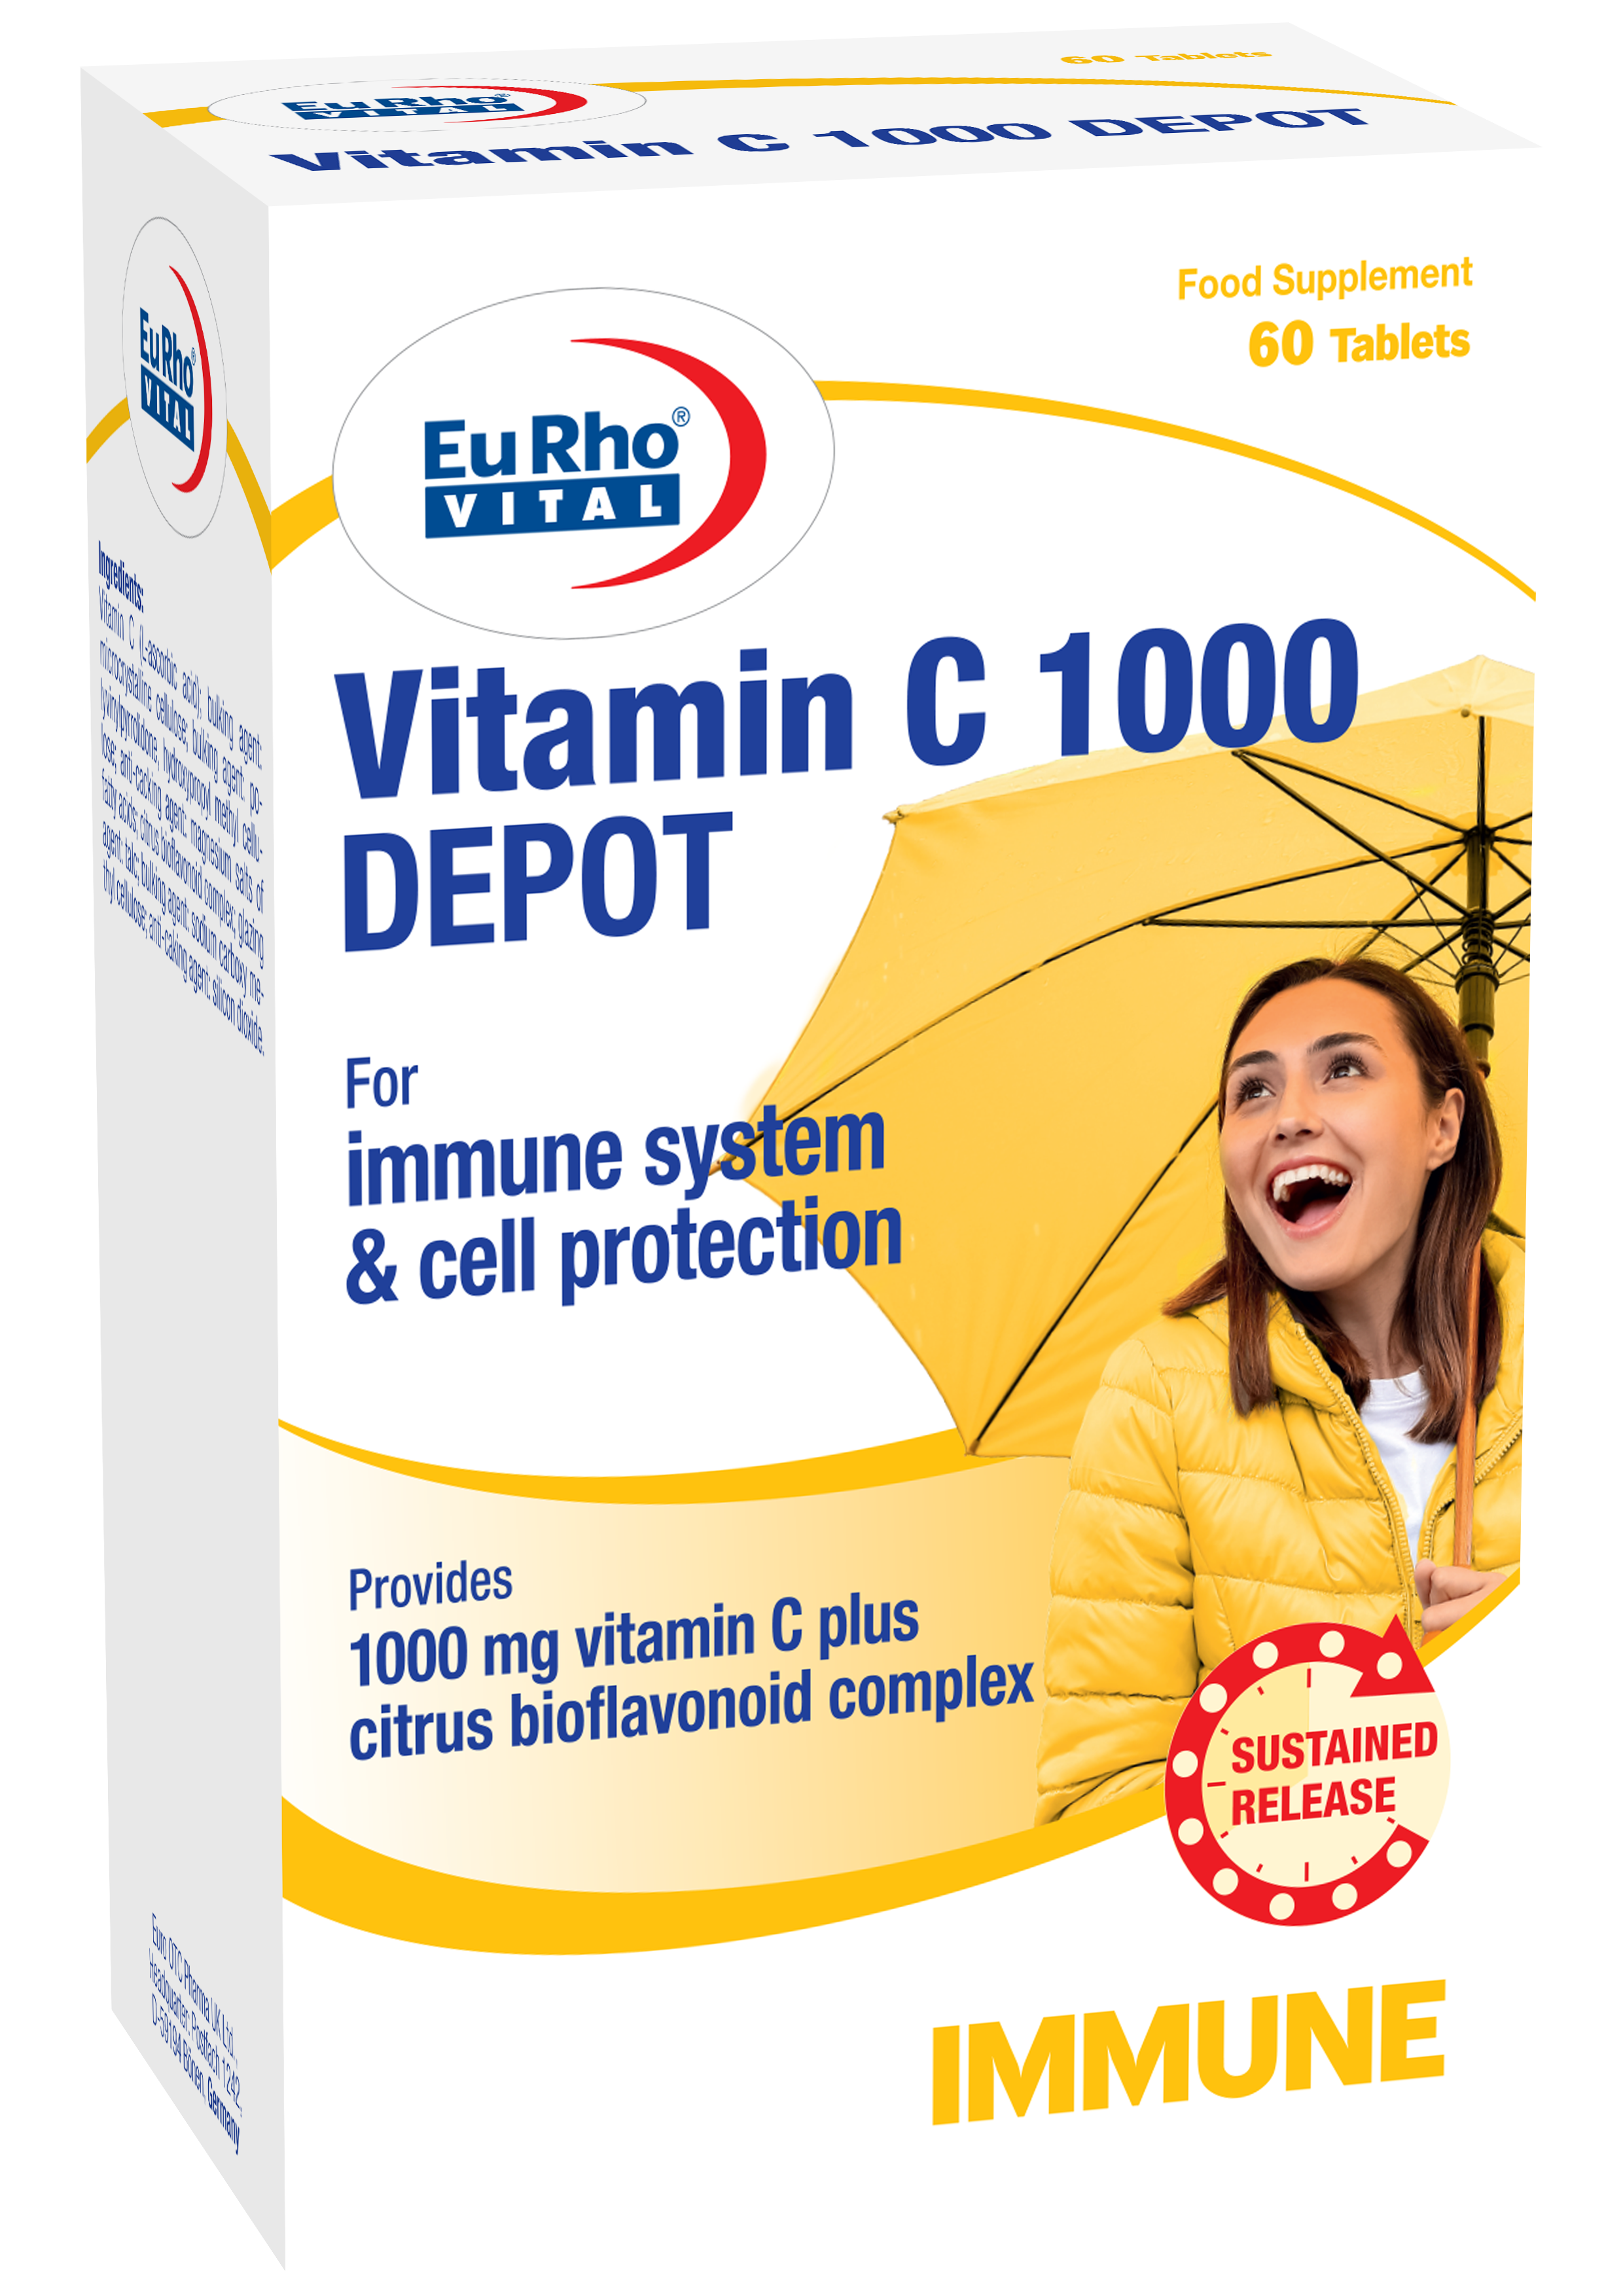 https://hakimanteb.com/wp-content/uploads/2023/02/Vitamin-C-1000-Depot.png